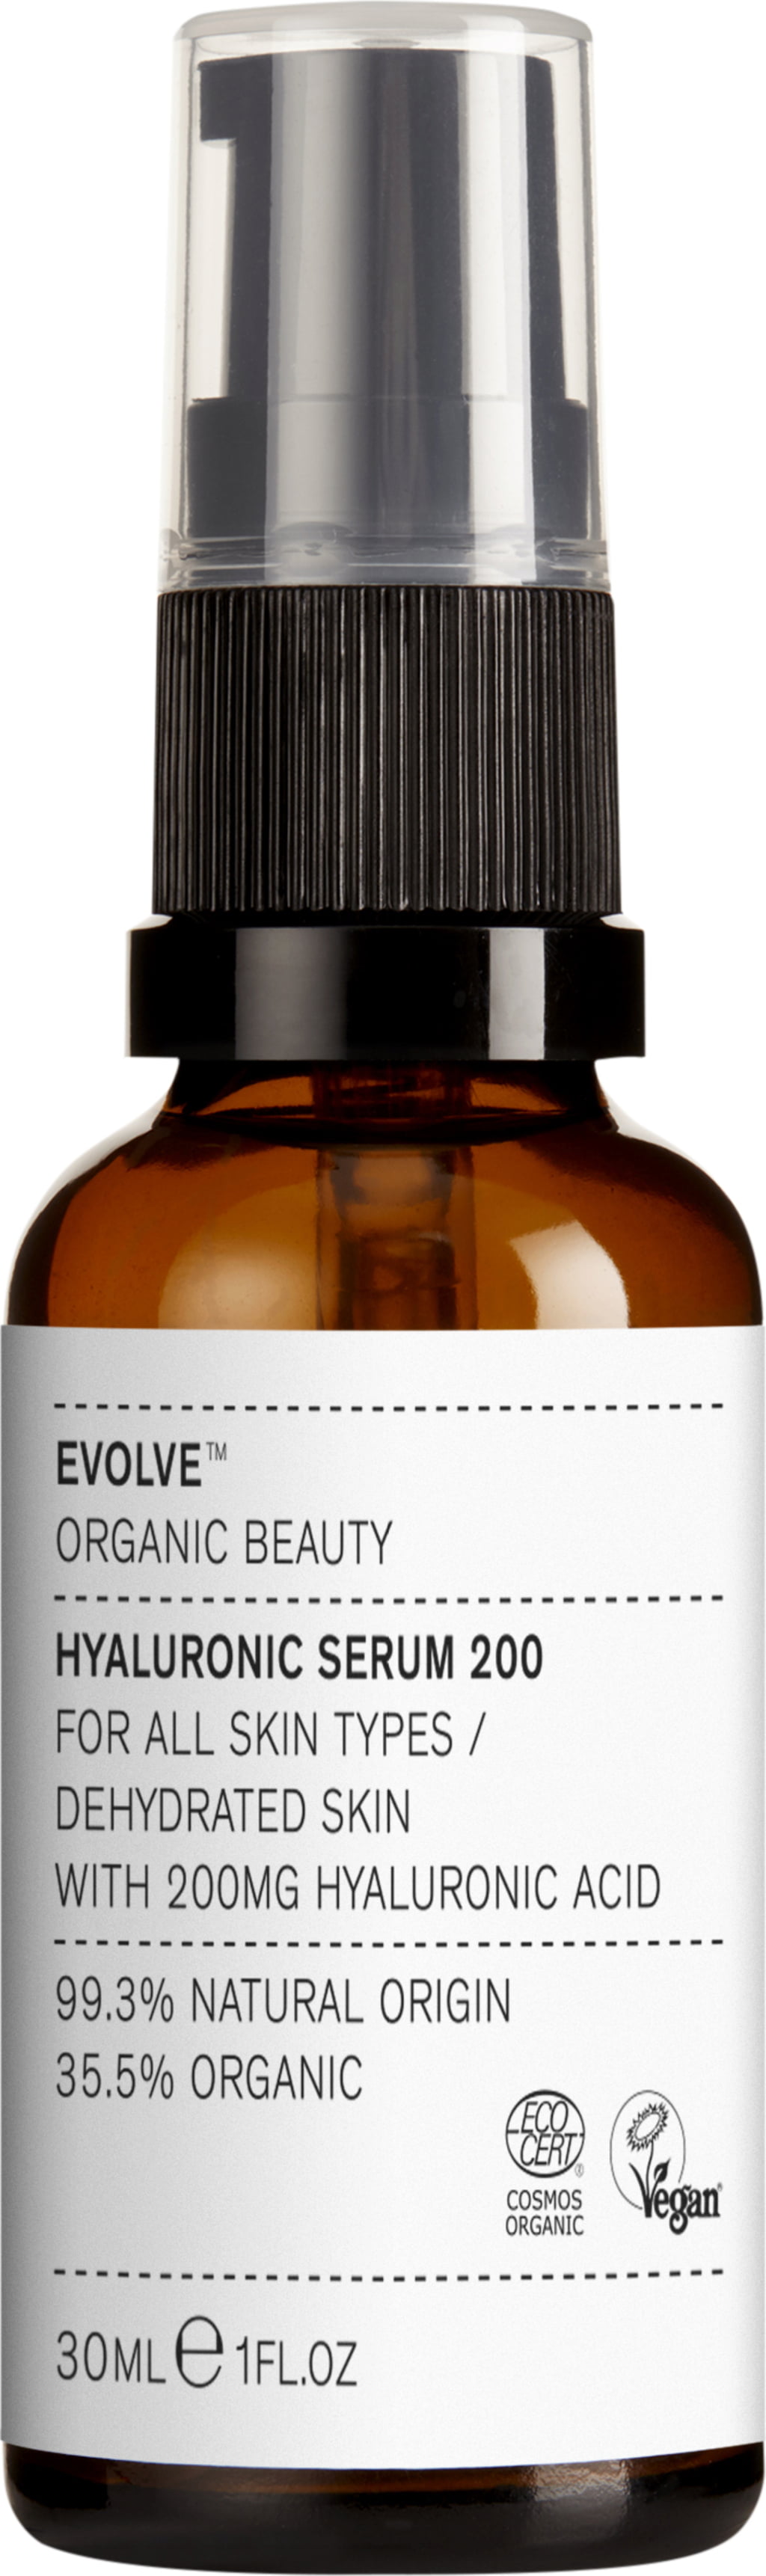 Evolve Organic Beauty Hyaluronic Serum 200 - 30 ml